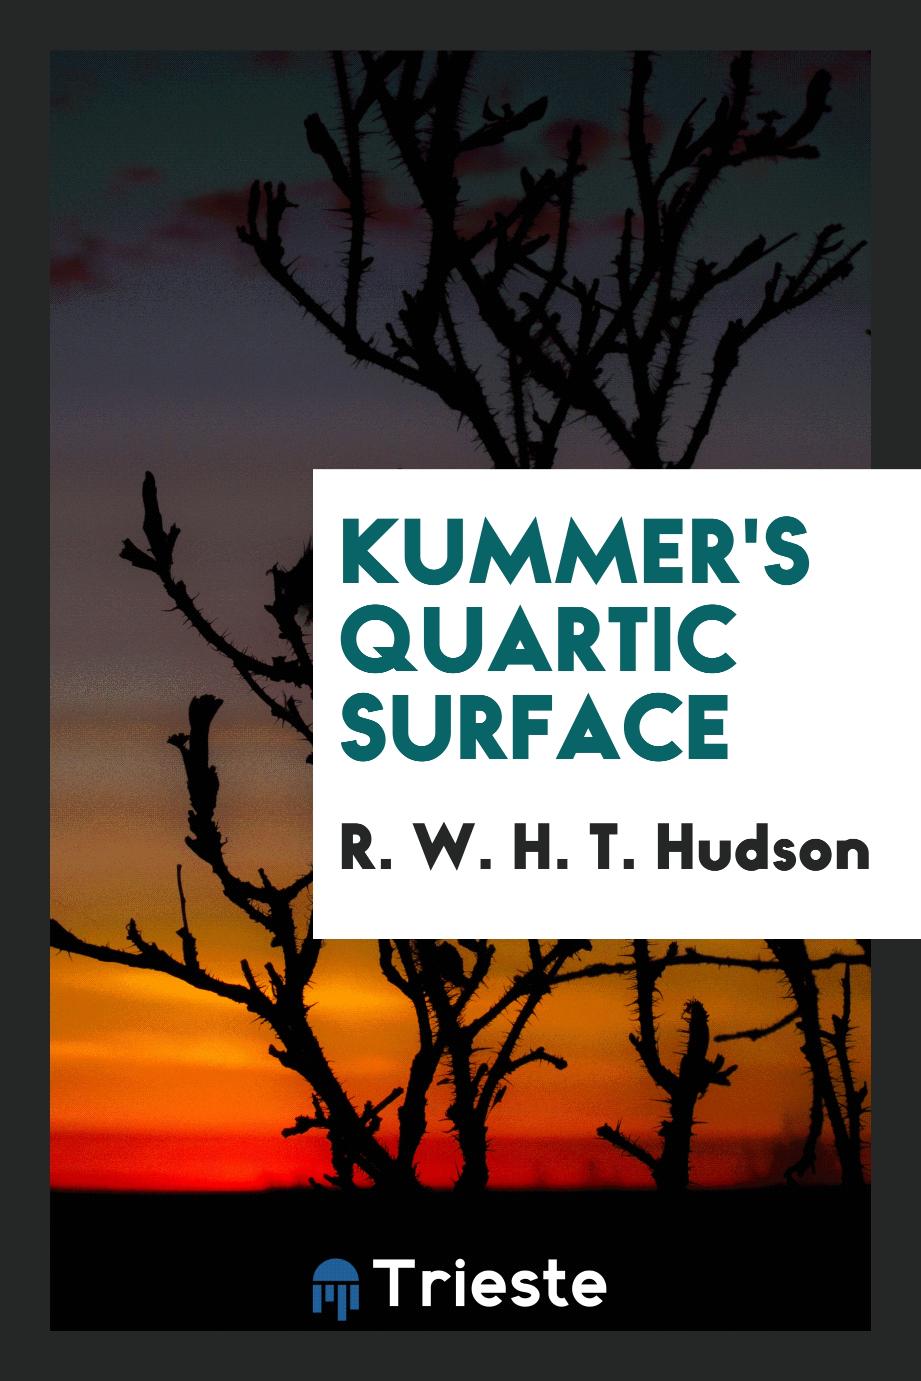 Kummer's quartic surface